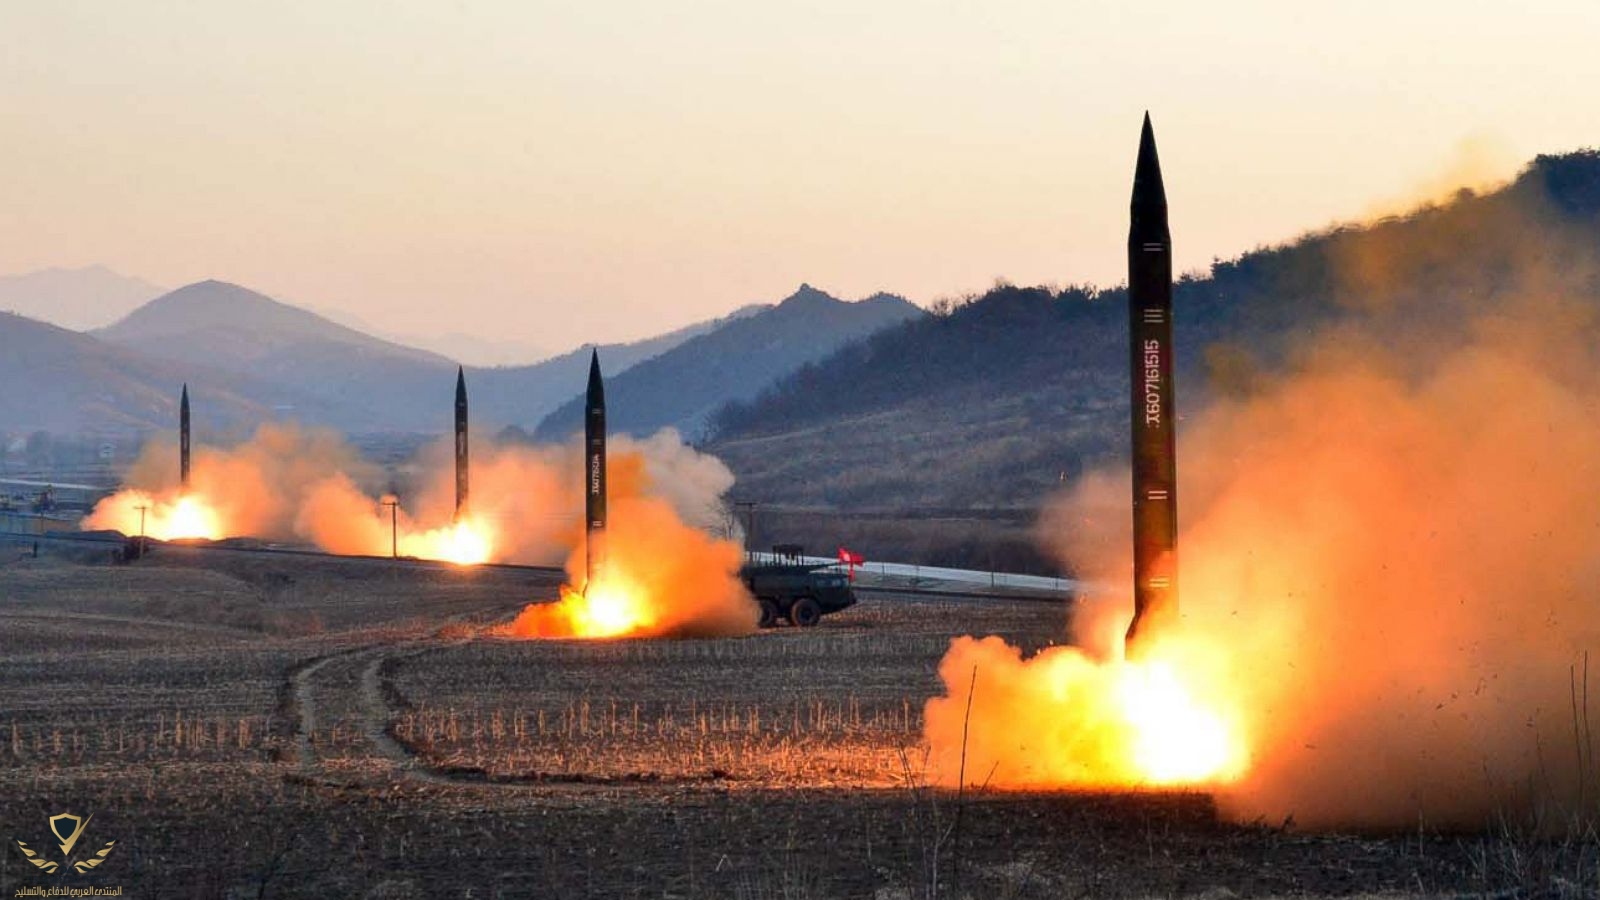 gty-north-korea-missile-launch-04-jc-170307_16x9_1600.jpg